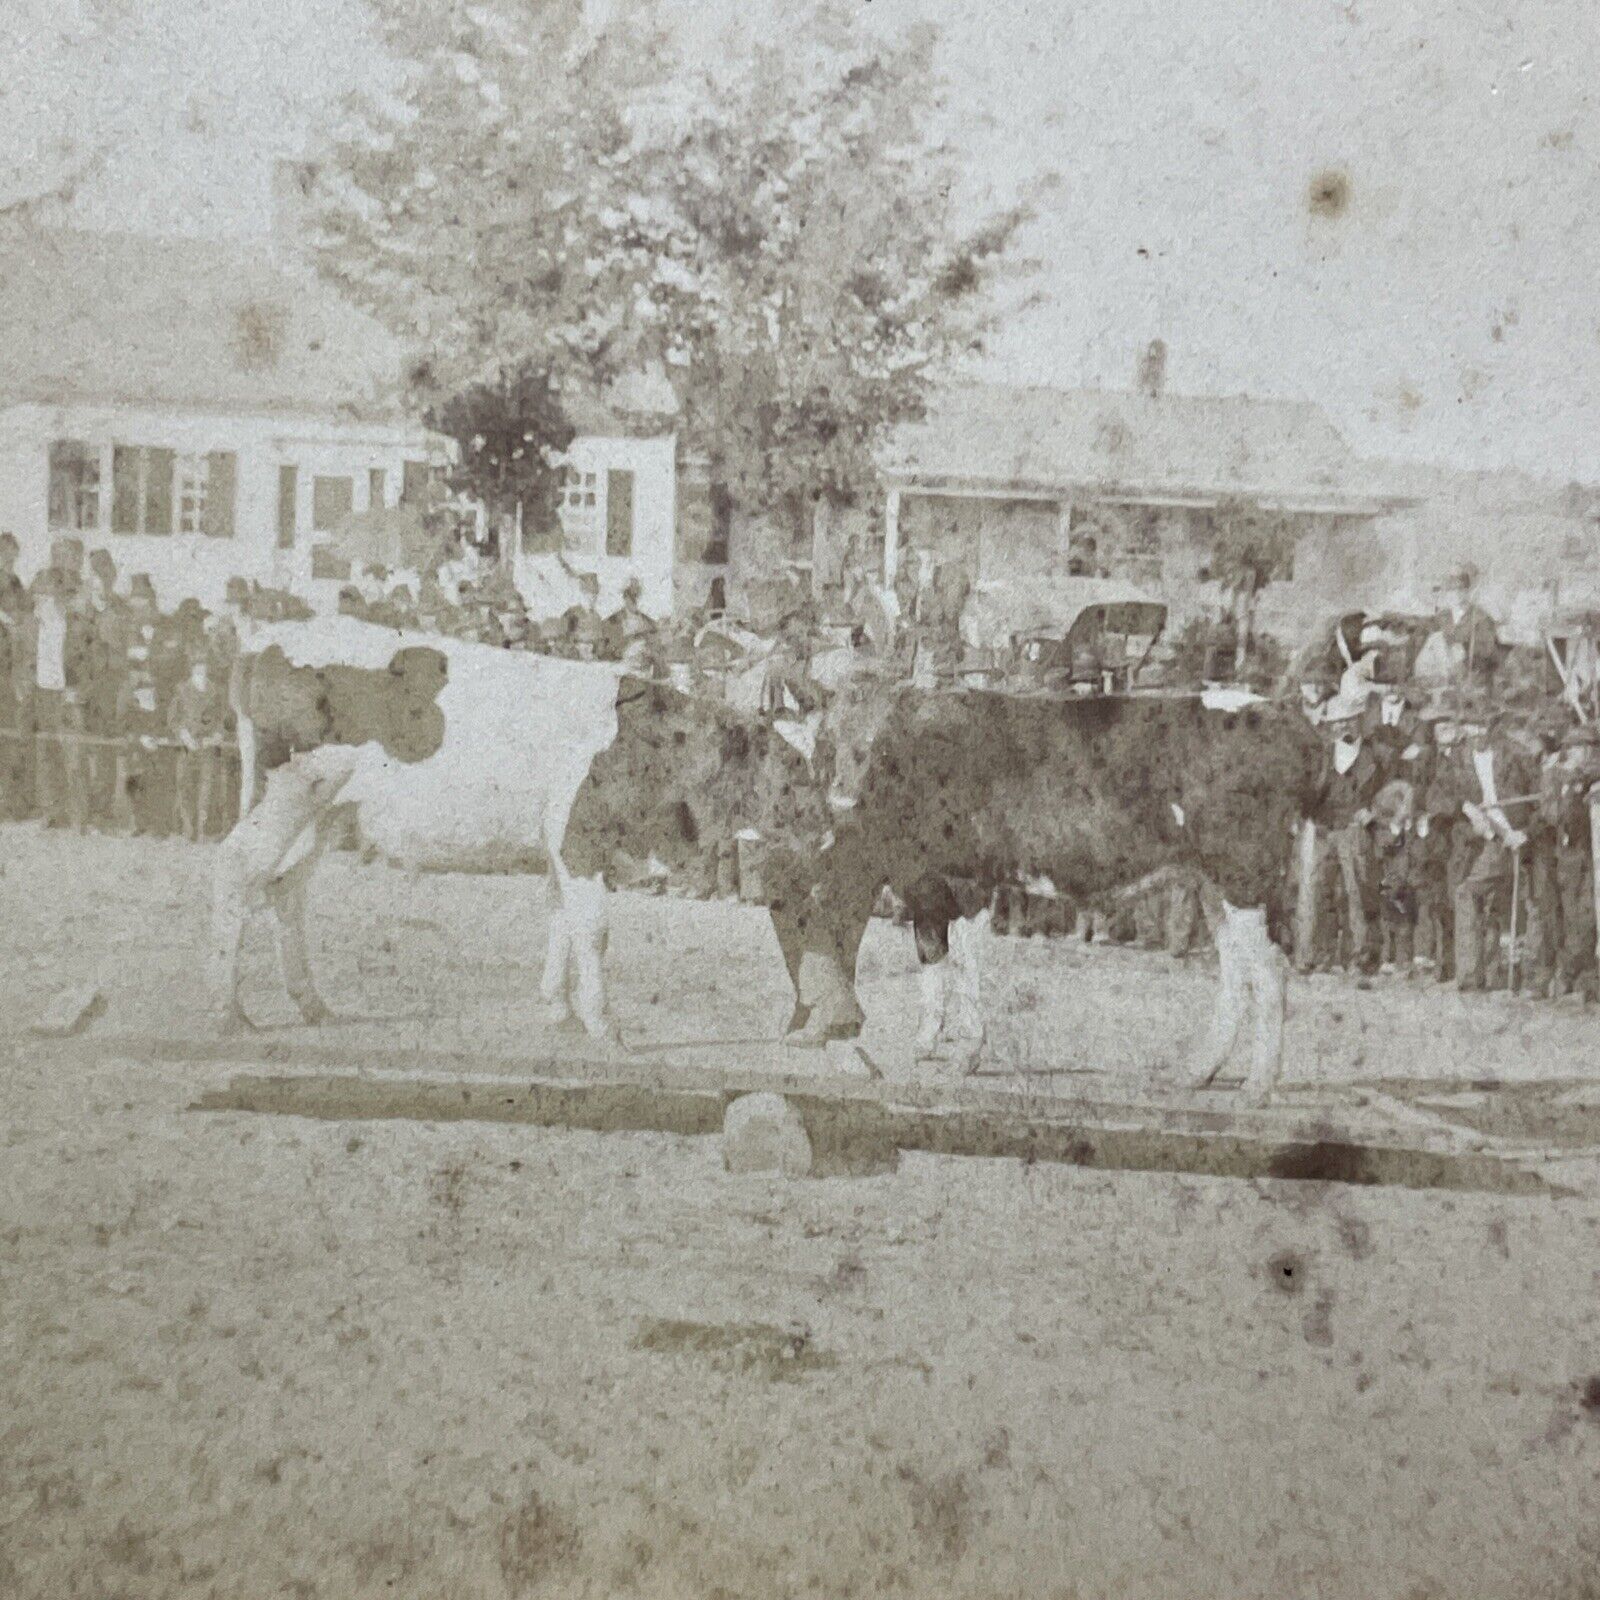 Antique 1878 'Cow Balancing' Marlow Town Fair NH Stereoview Photo Card V2100